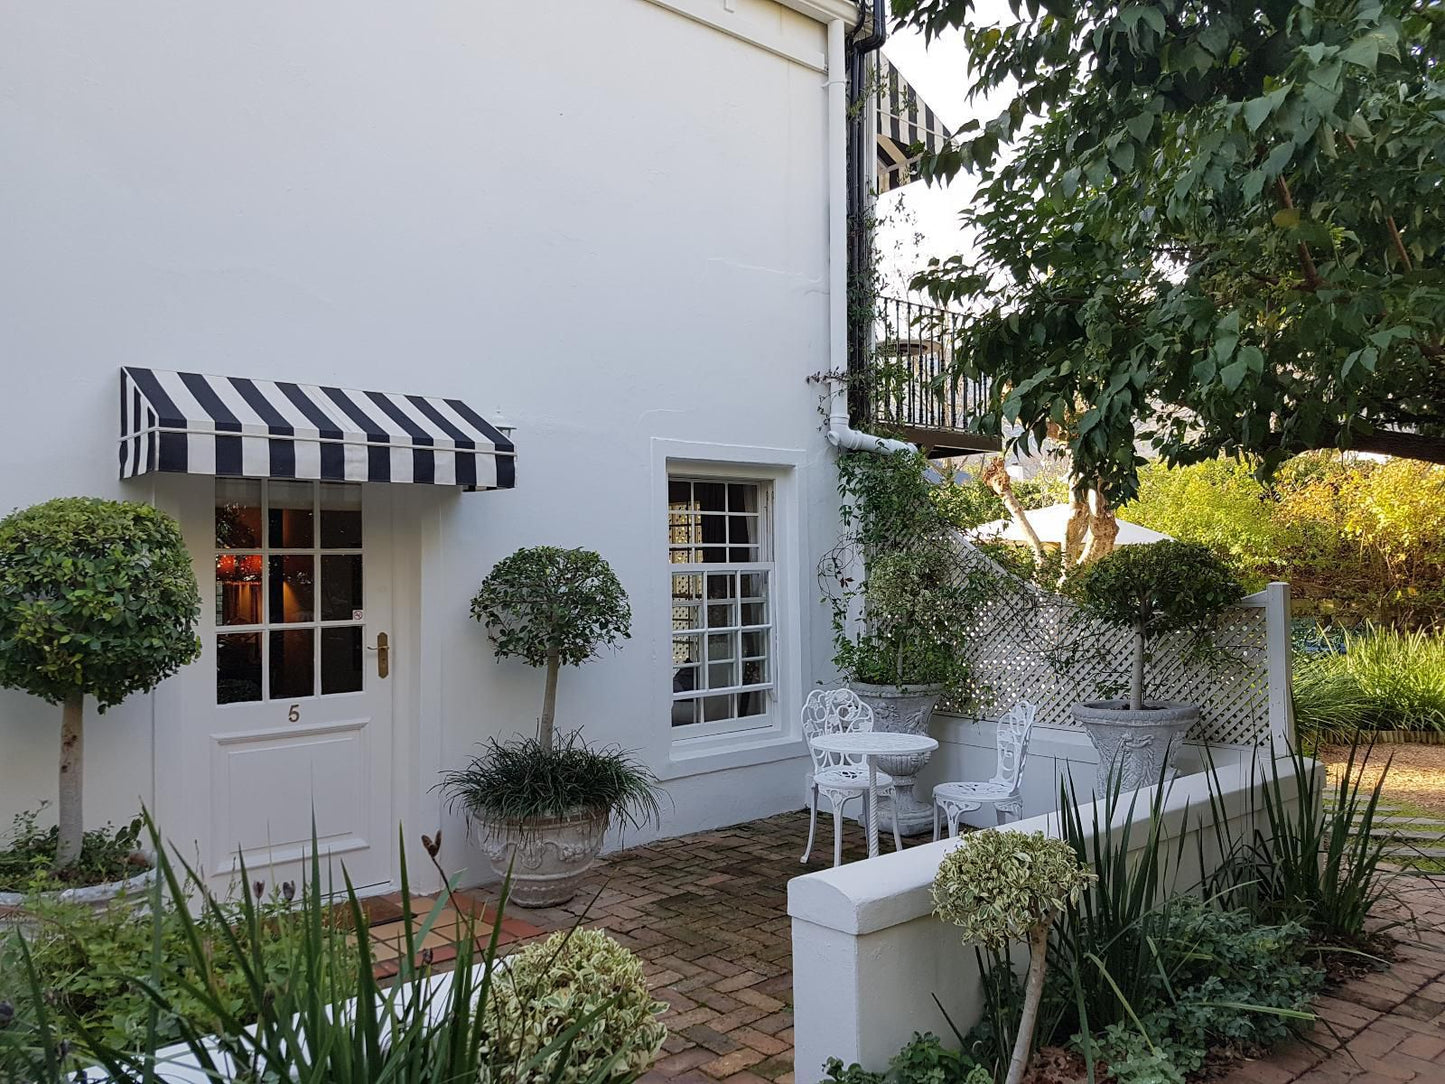 Maison Chablis Guest House Franschhoek Western Cape South Africa House, Building, Architecture, Garden, Nature, Plant